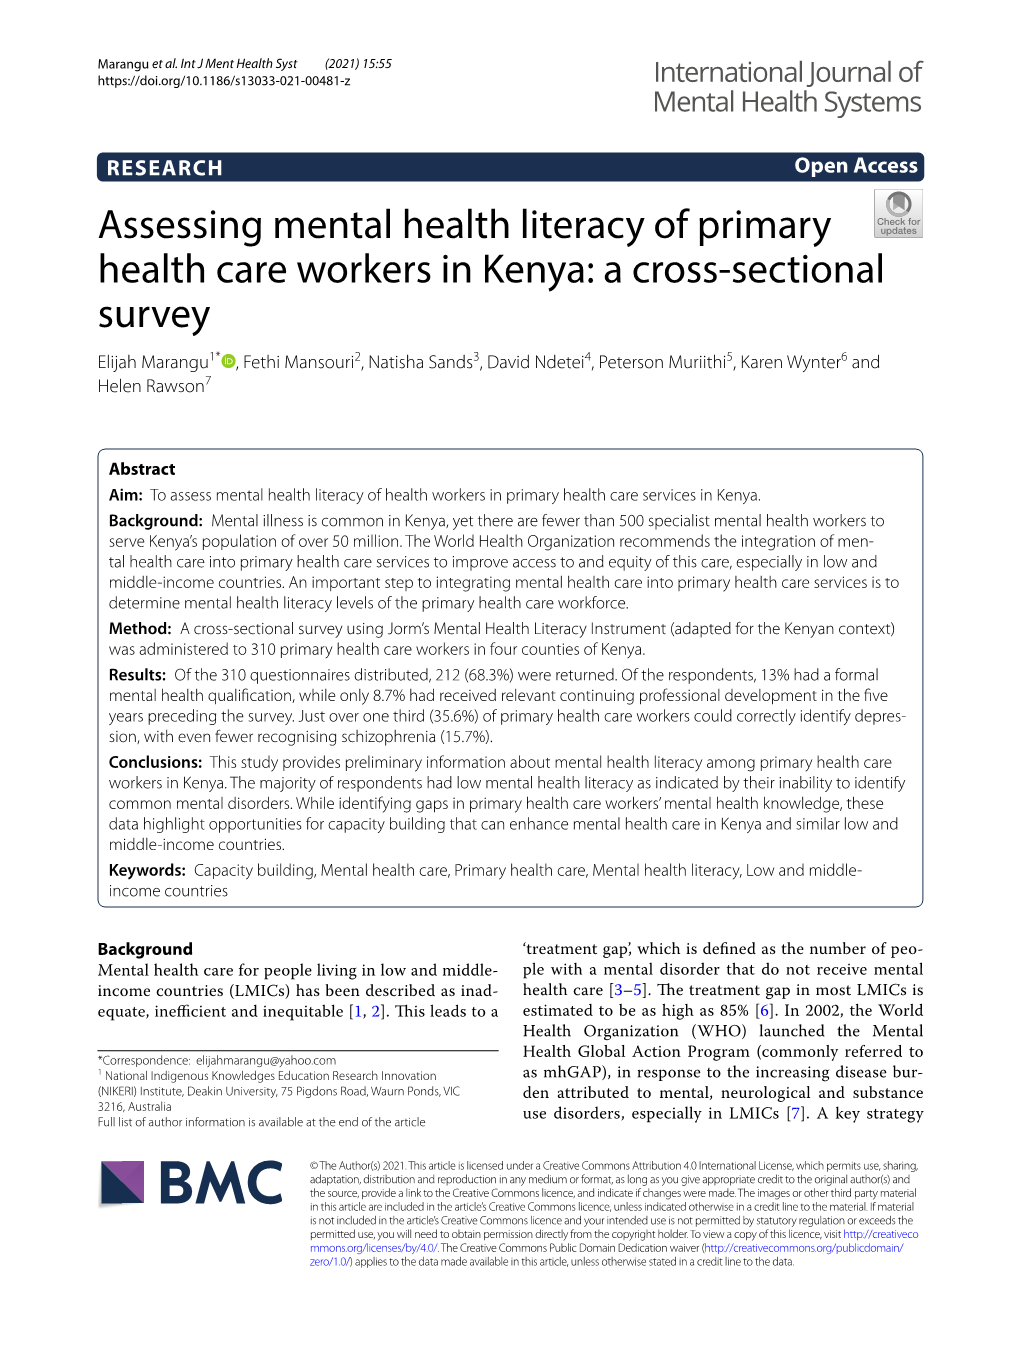 Assessing Mental Health Literacy of Primary Health Care Workers in Kenya